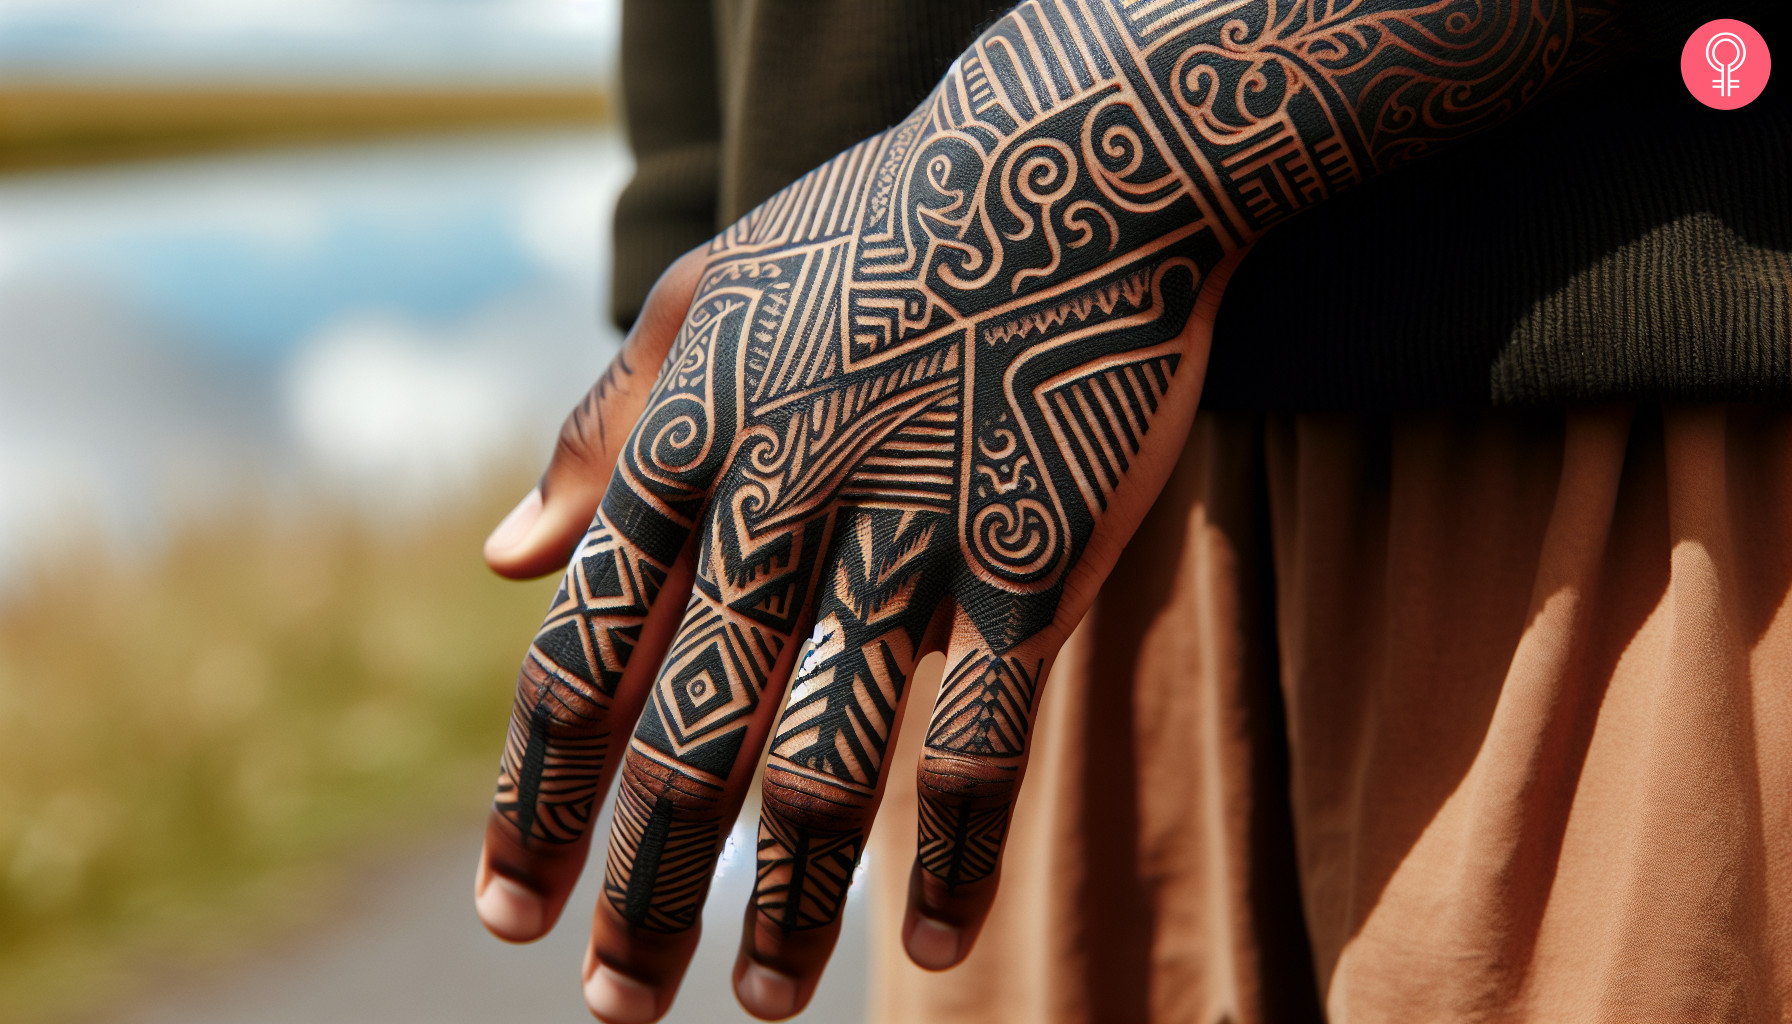 Vein maori tattoo on the hand of a woman